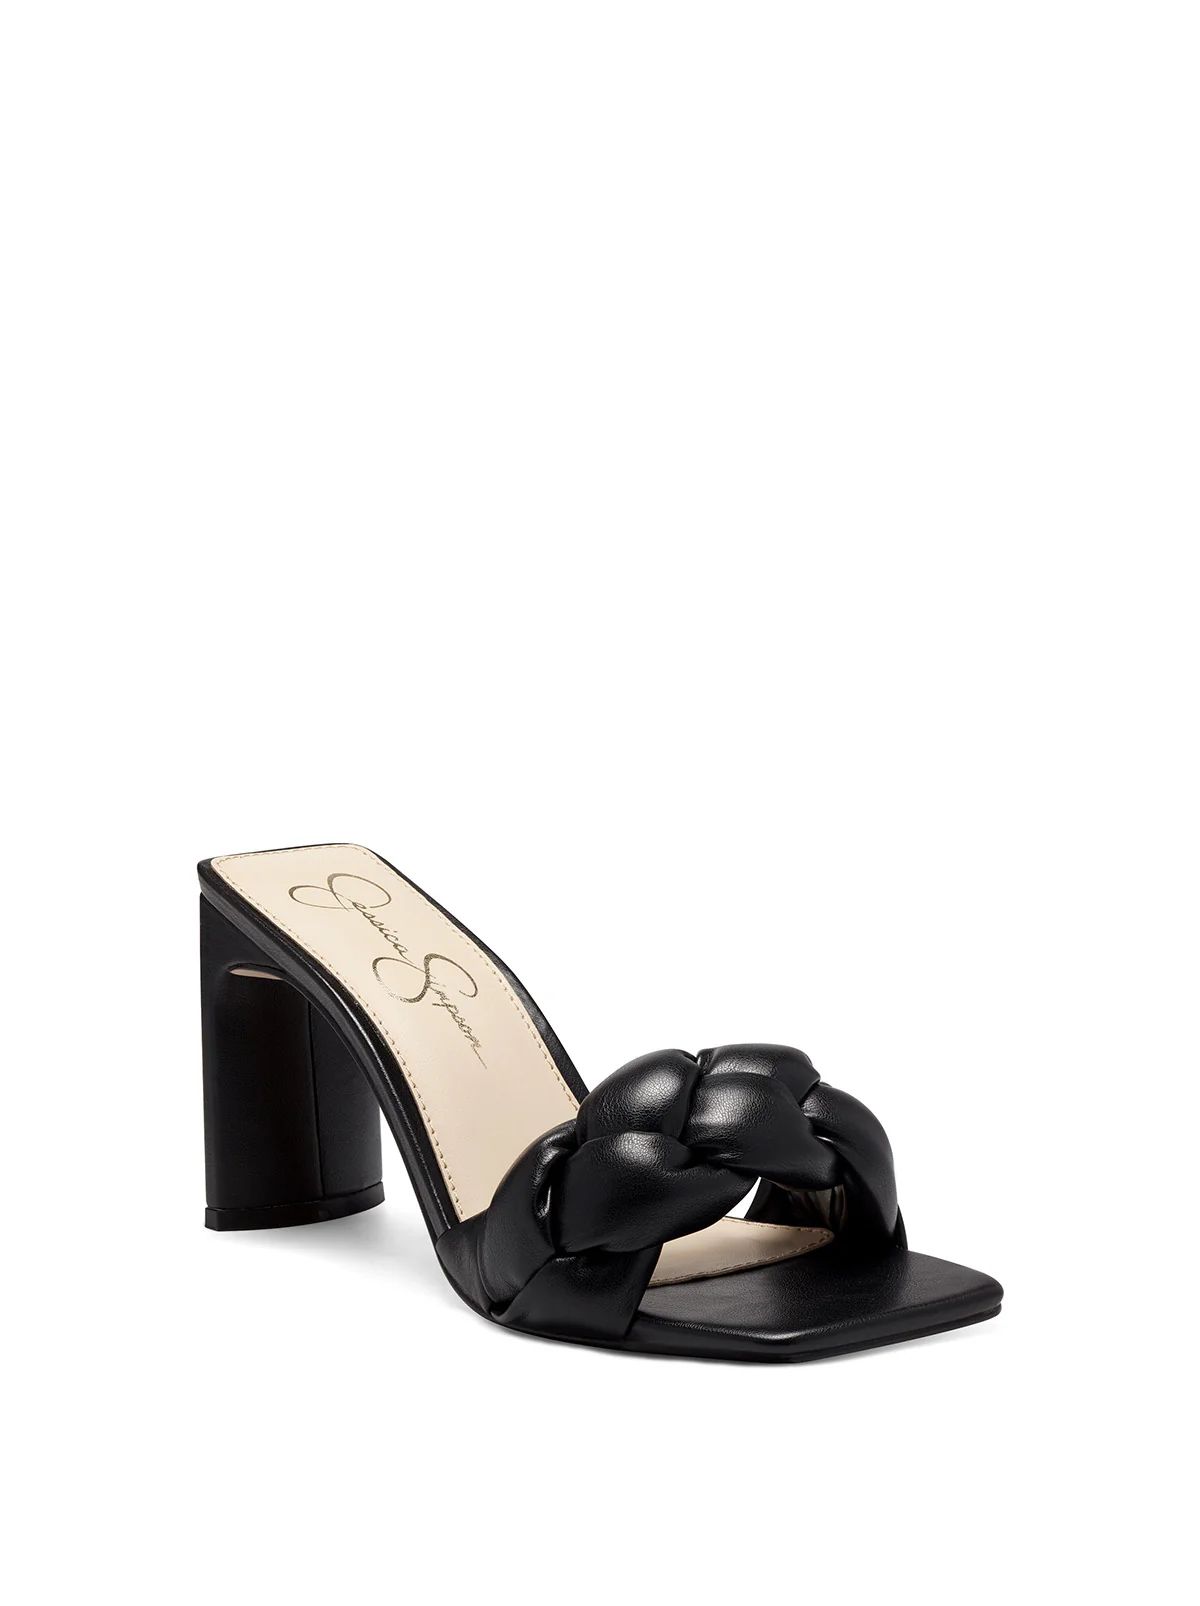 Sassia High Heel Slide in Black | Jessica Simpson E Commerce